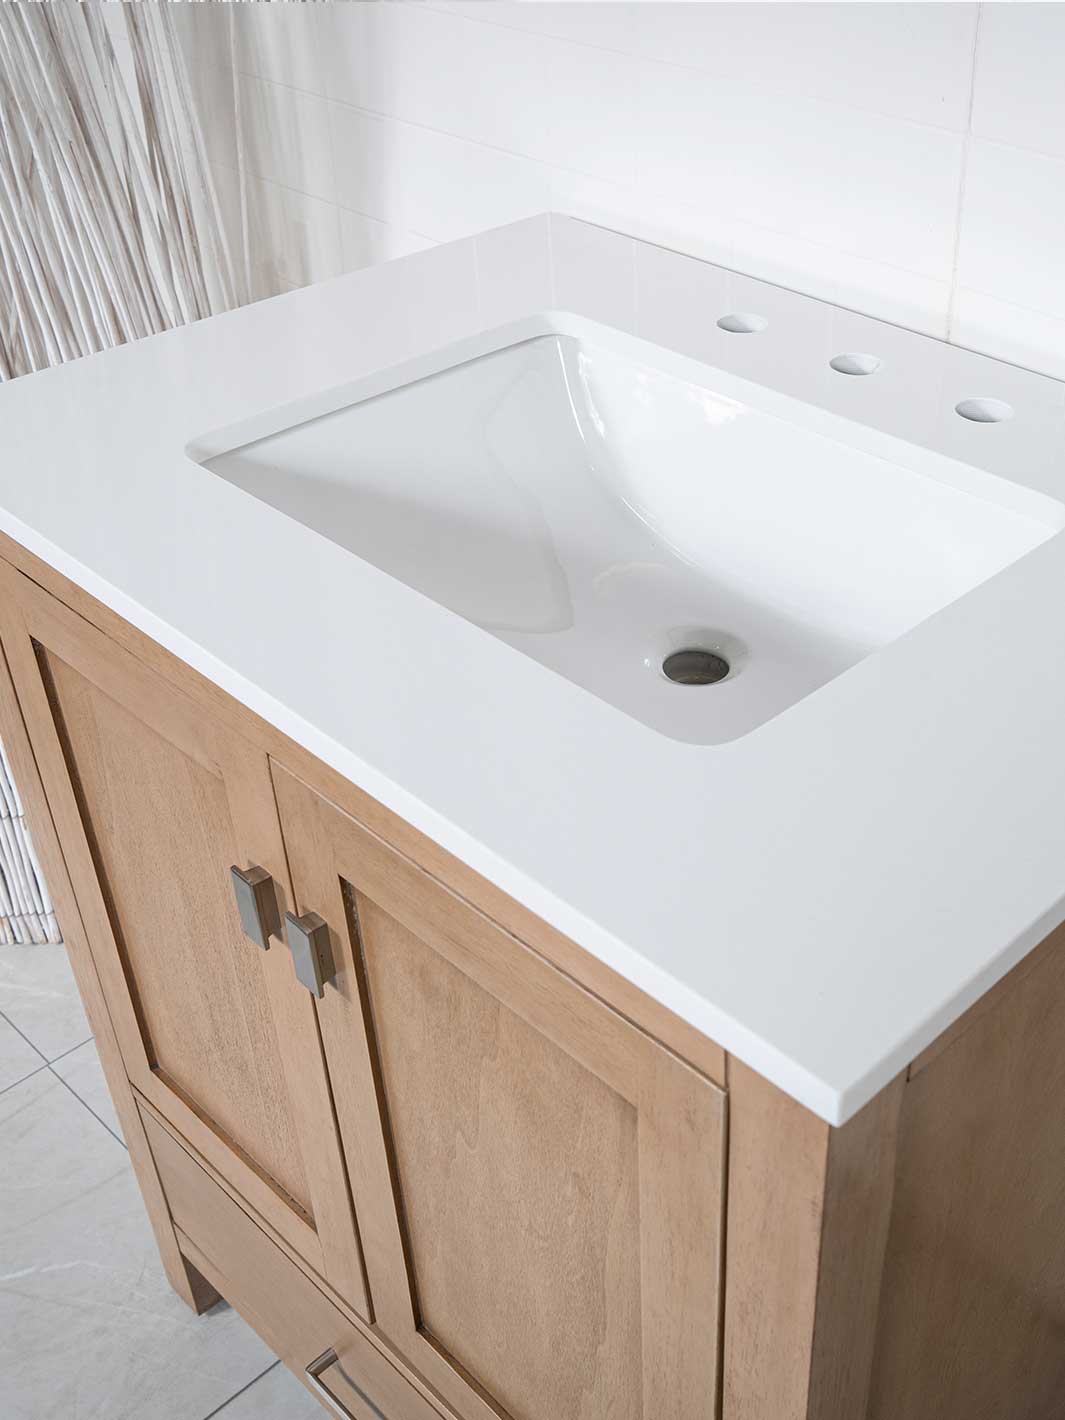 white quartz counter with attached undermount sink